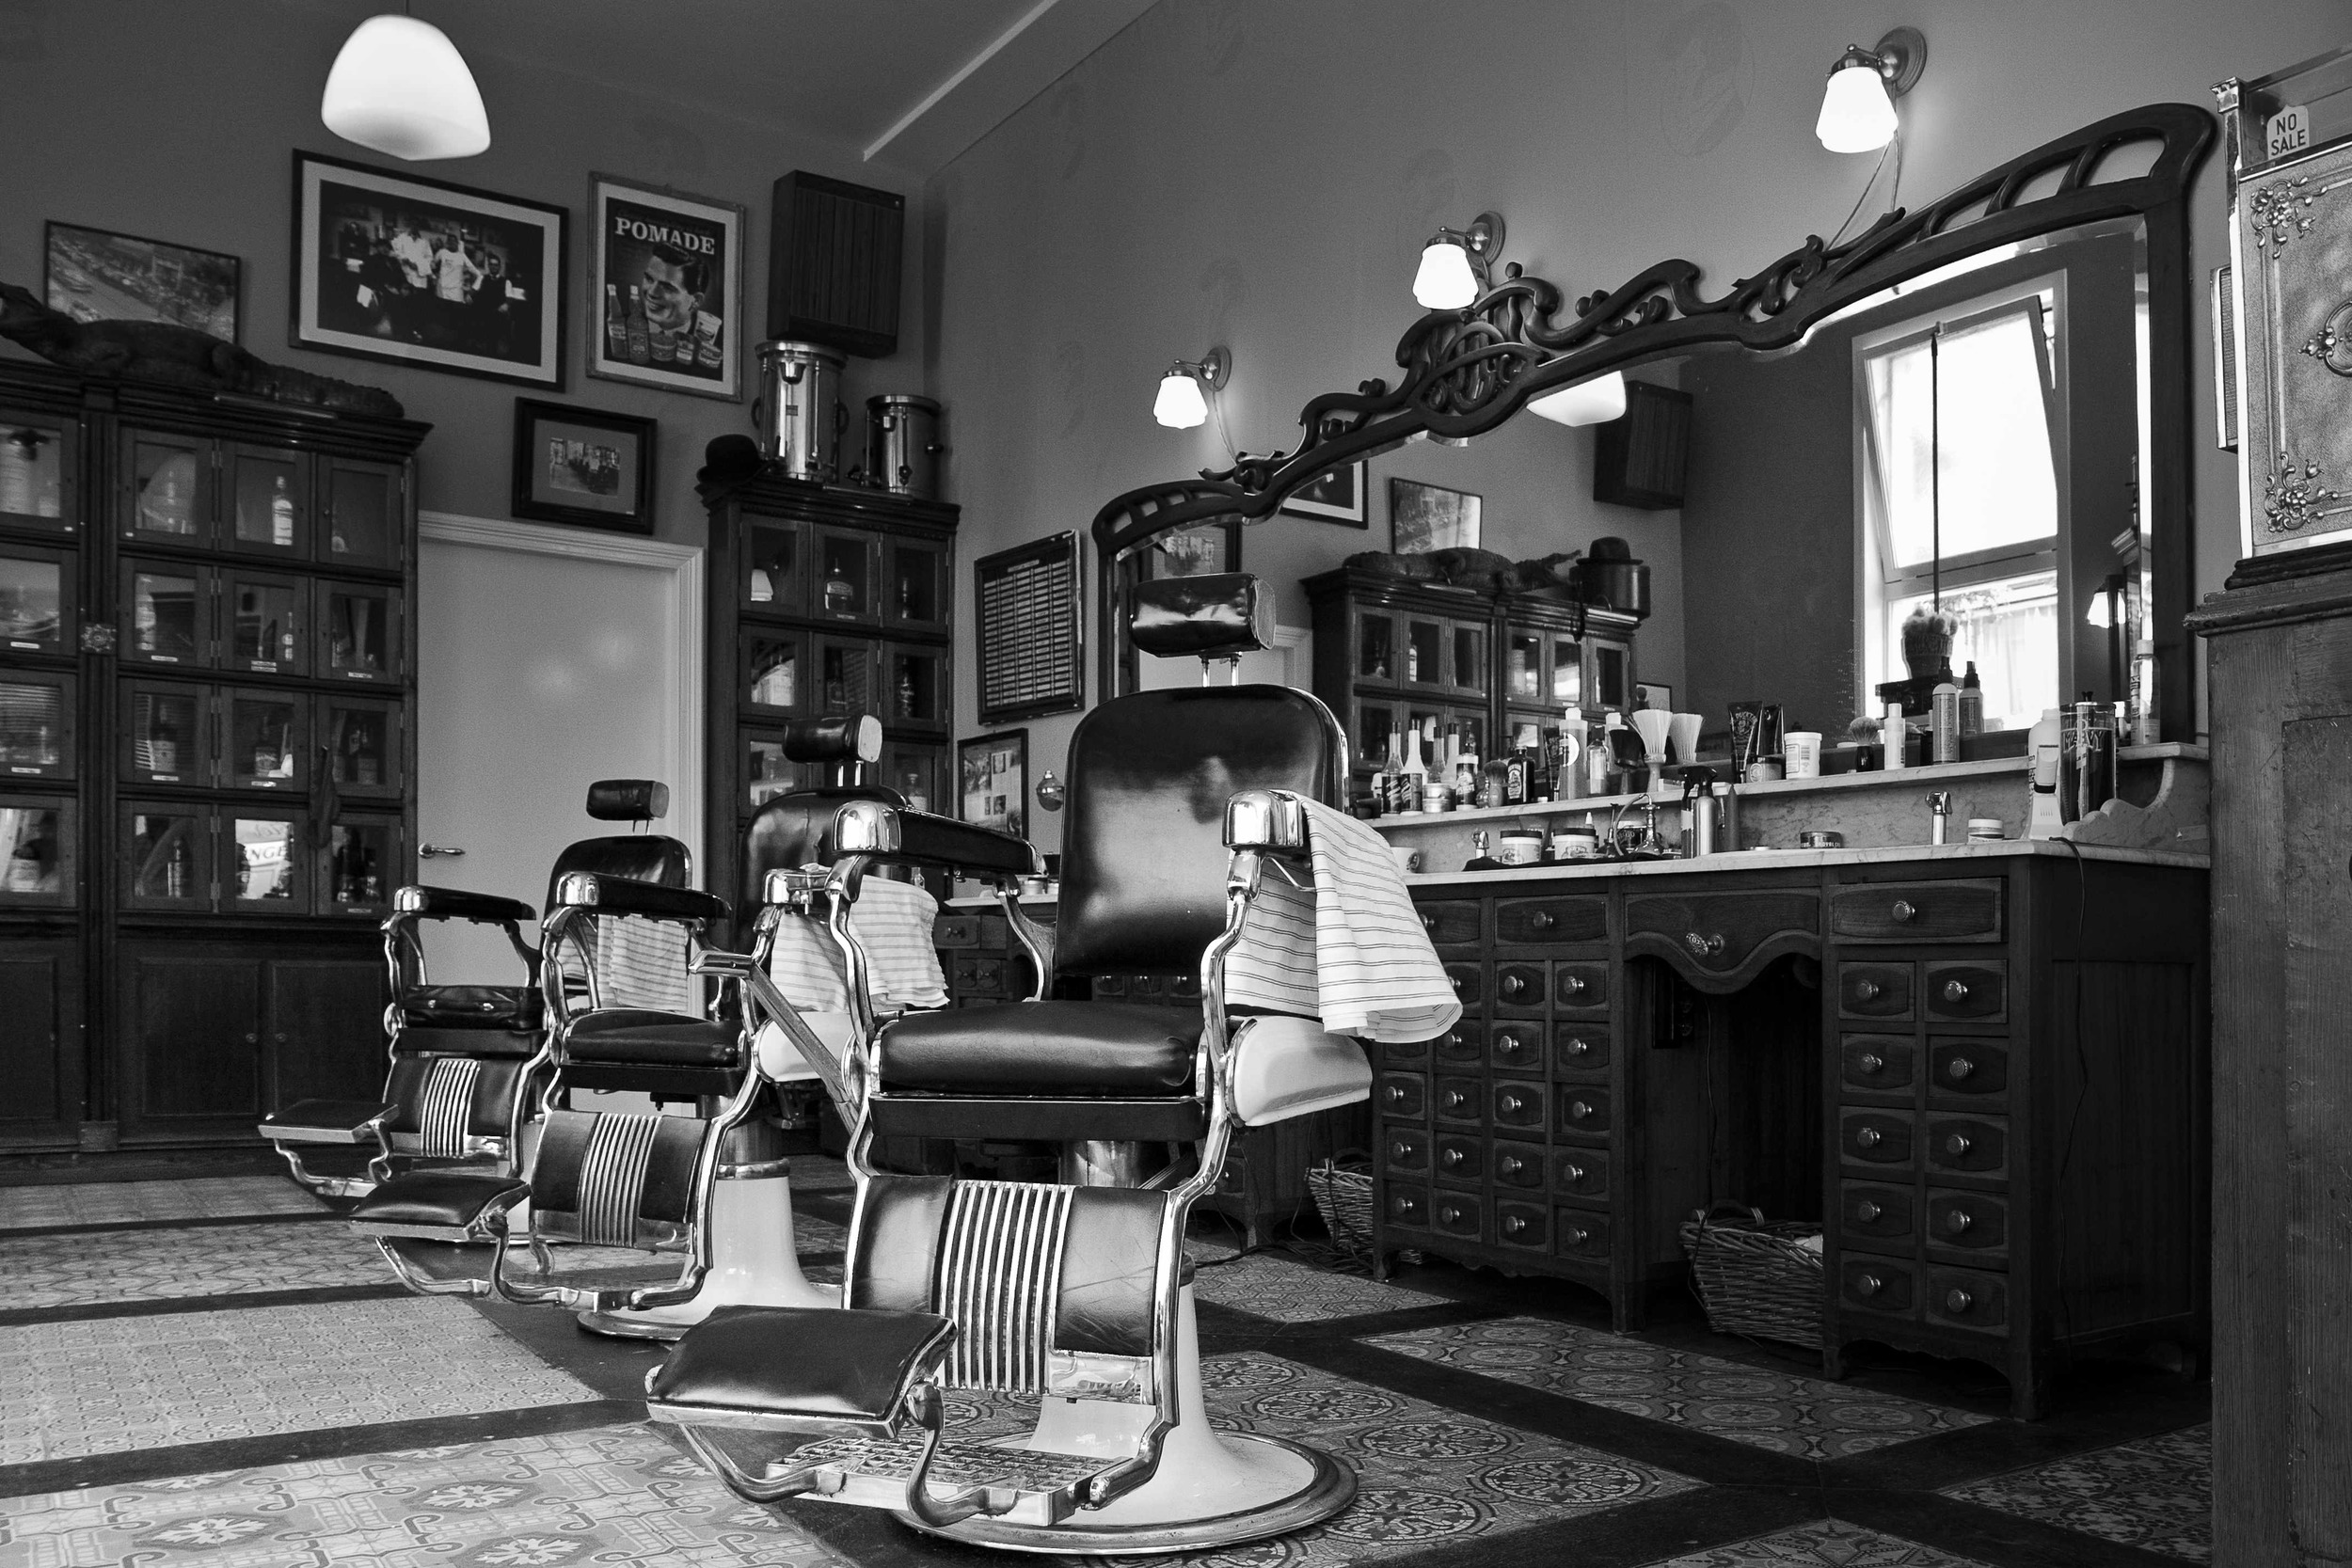 The Barbershop & Shaving Parlor